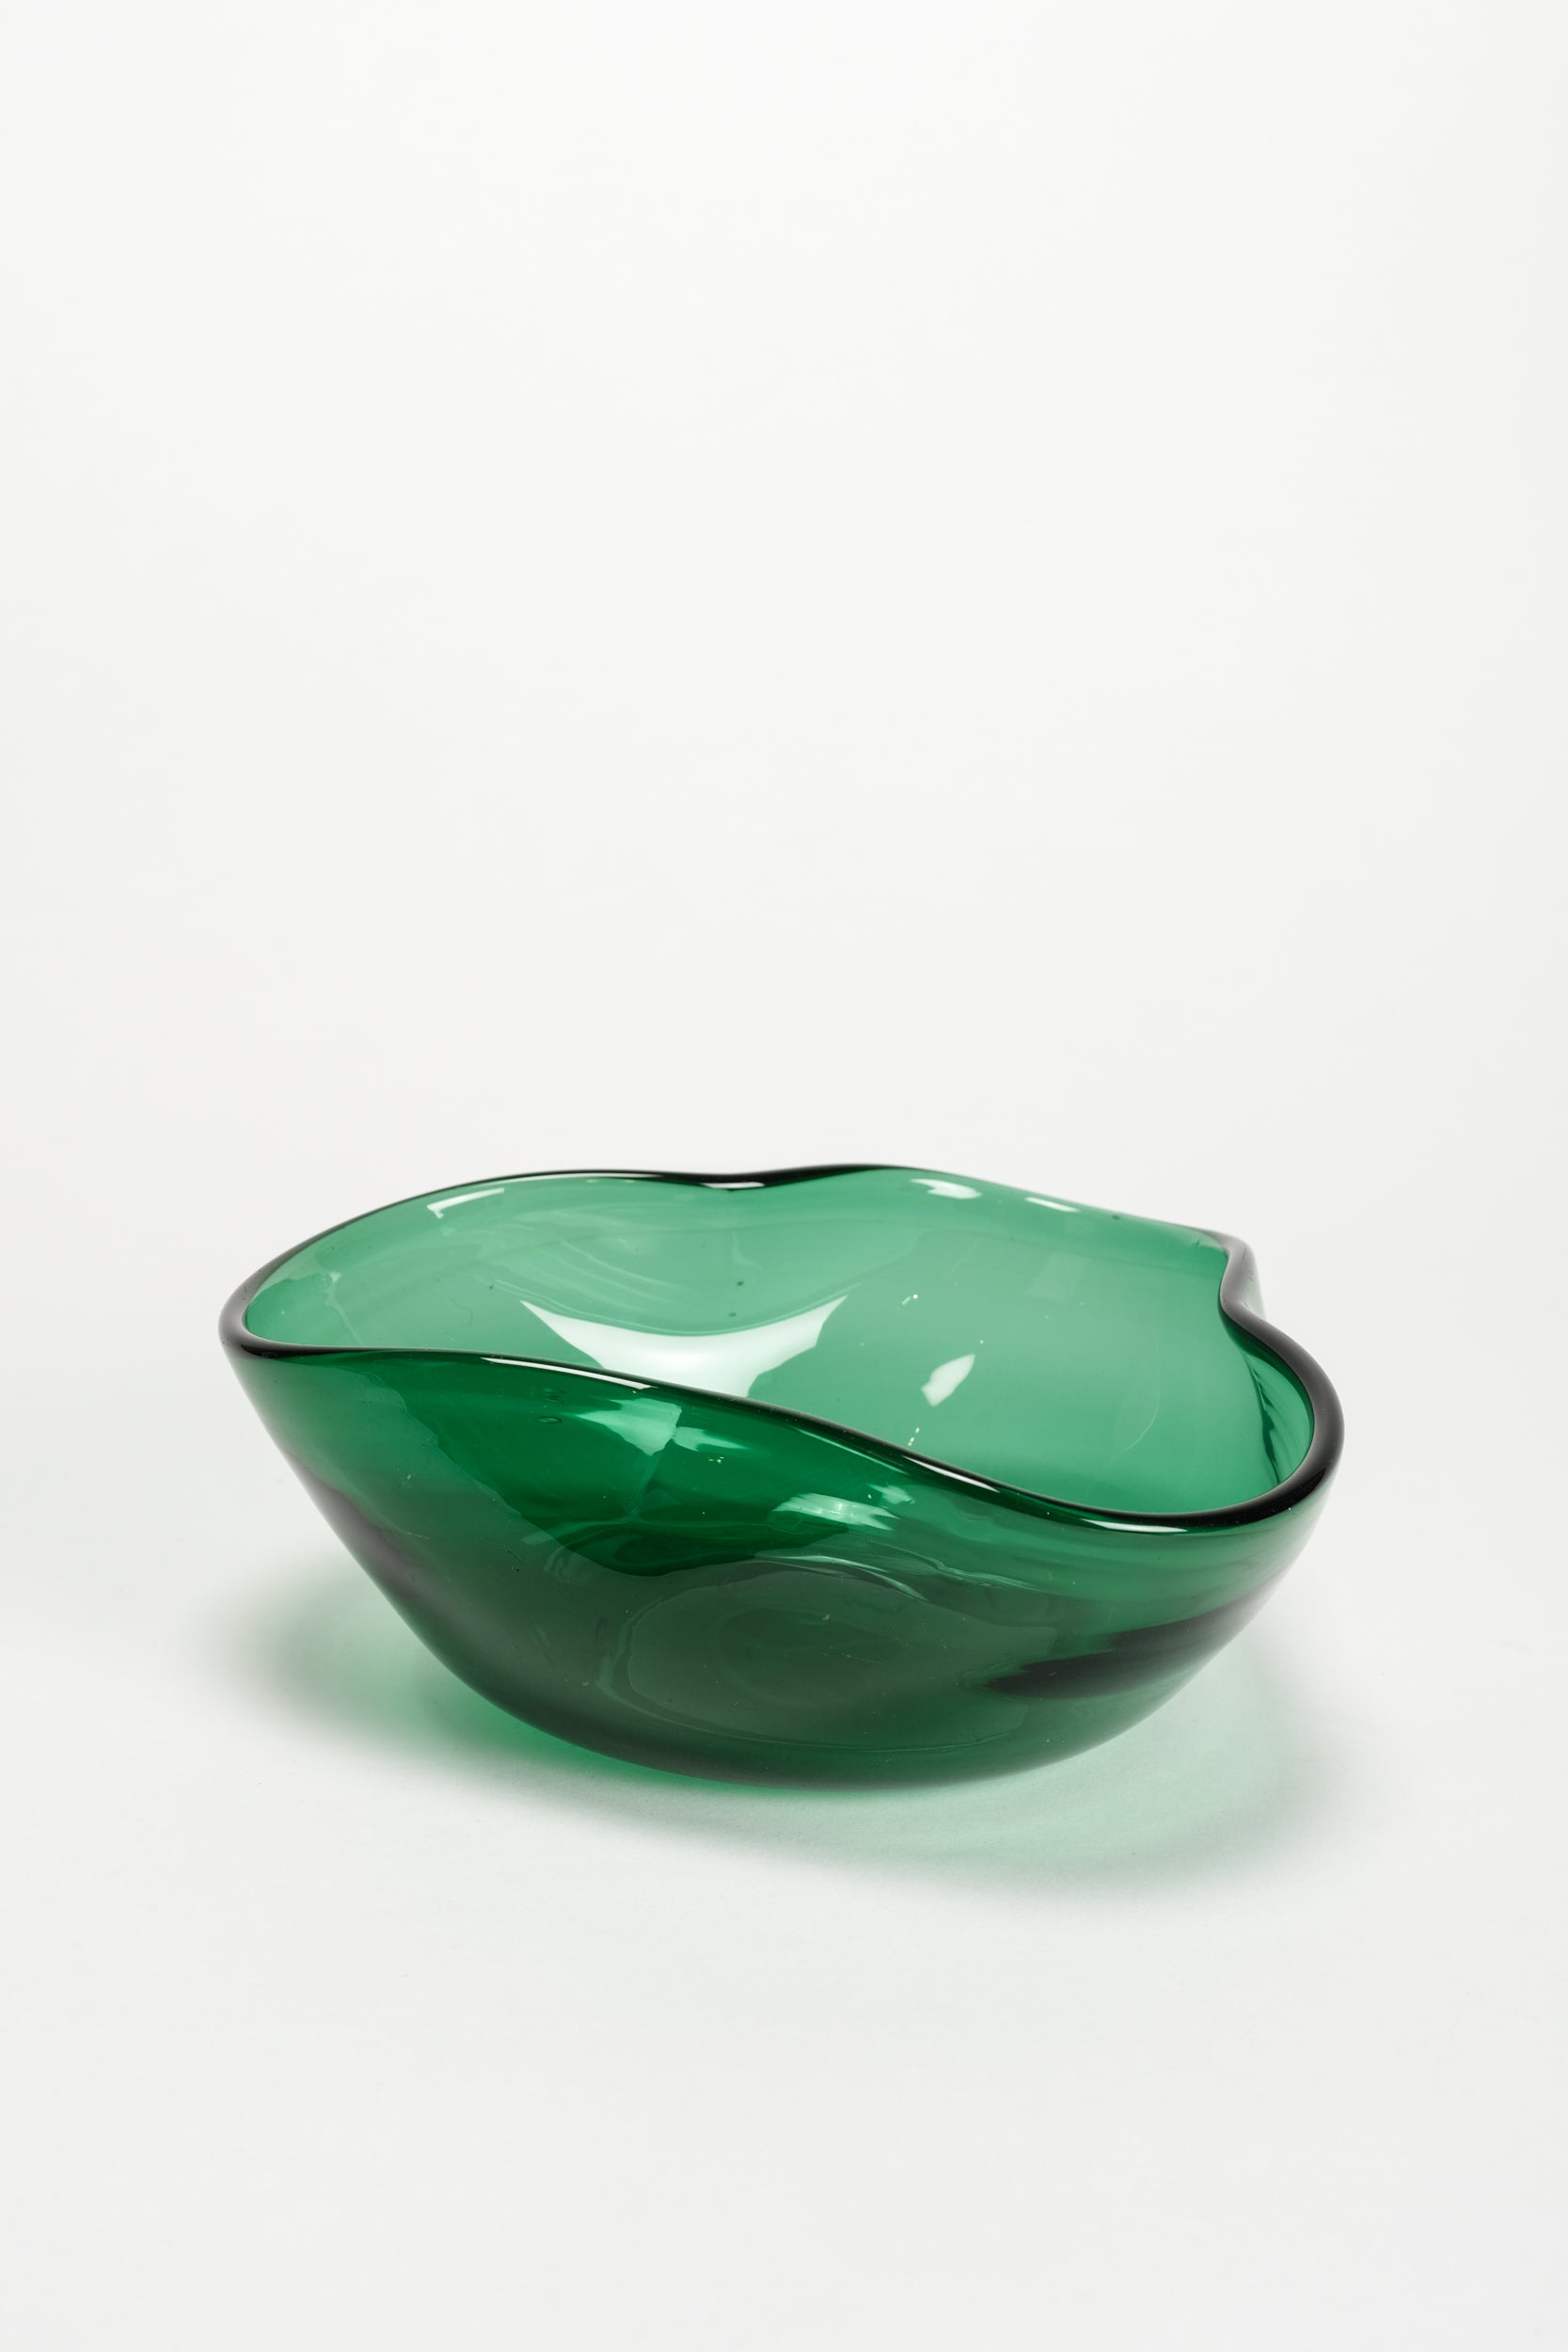 Grosse Empoli-Glas Schale, Italien, 60er